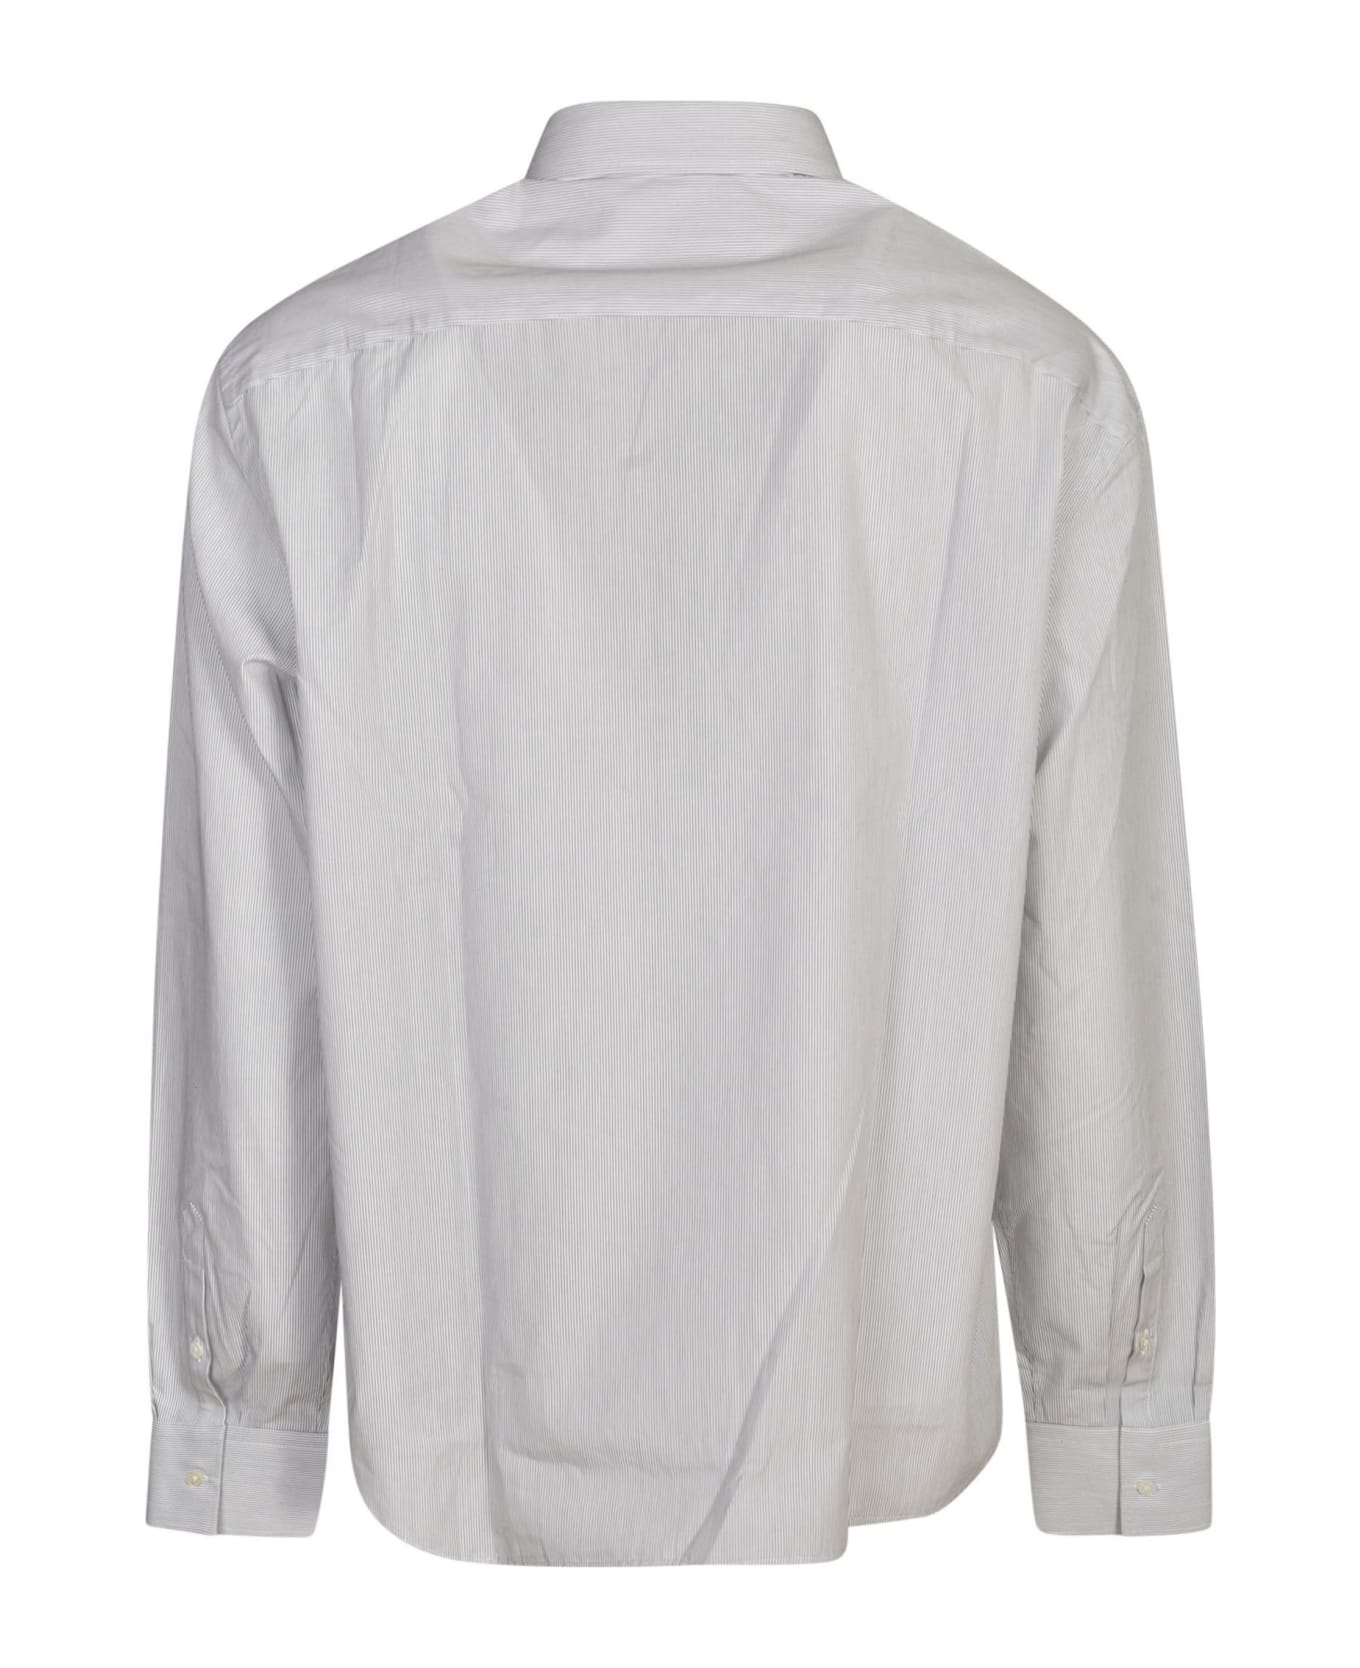 Lanvin Chemise Shirt - White/Black